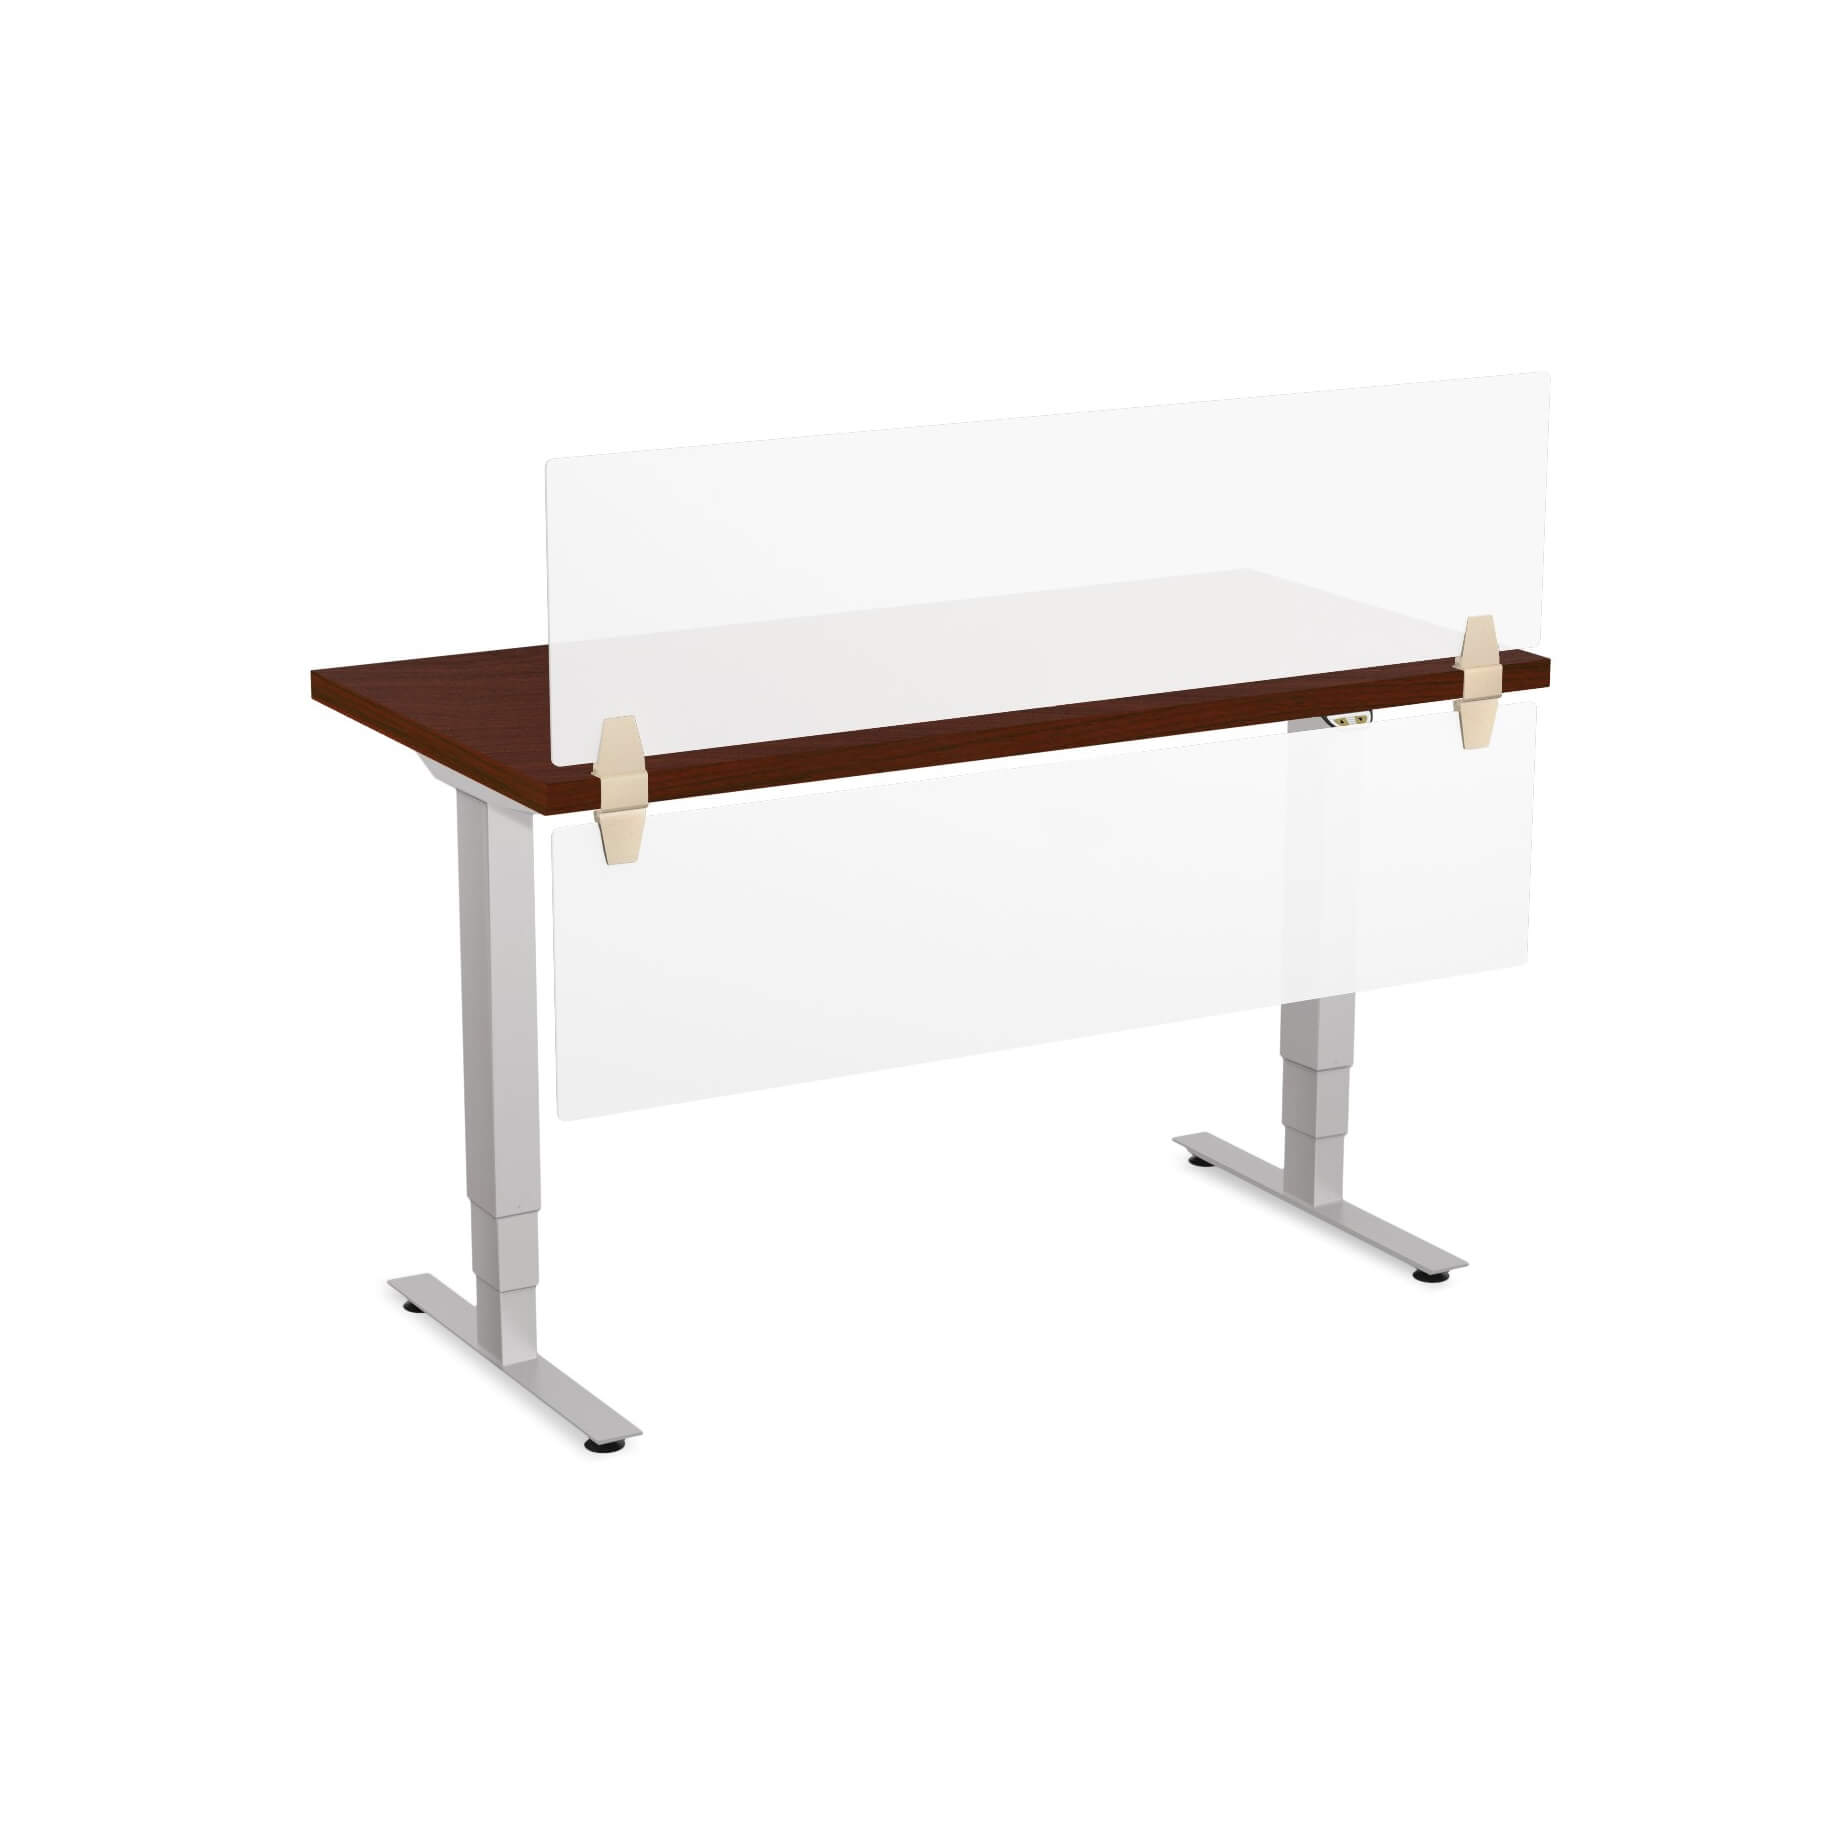 sit-stand-desk-height-adjustable-table-1-2-3-4.jpg